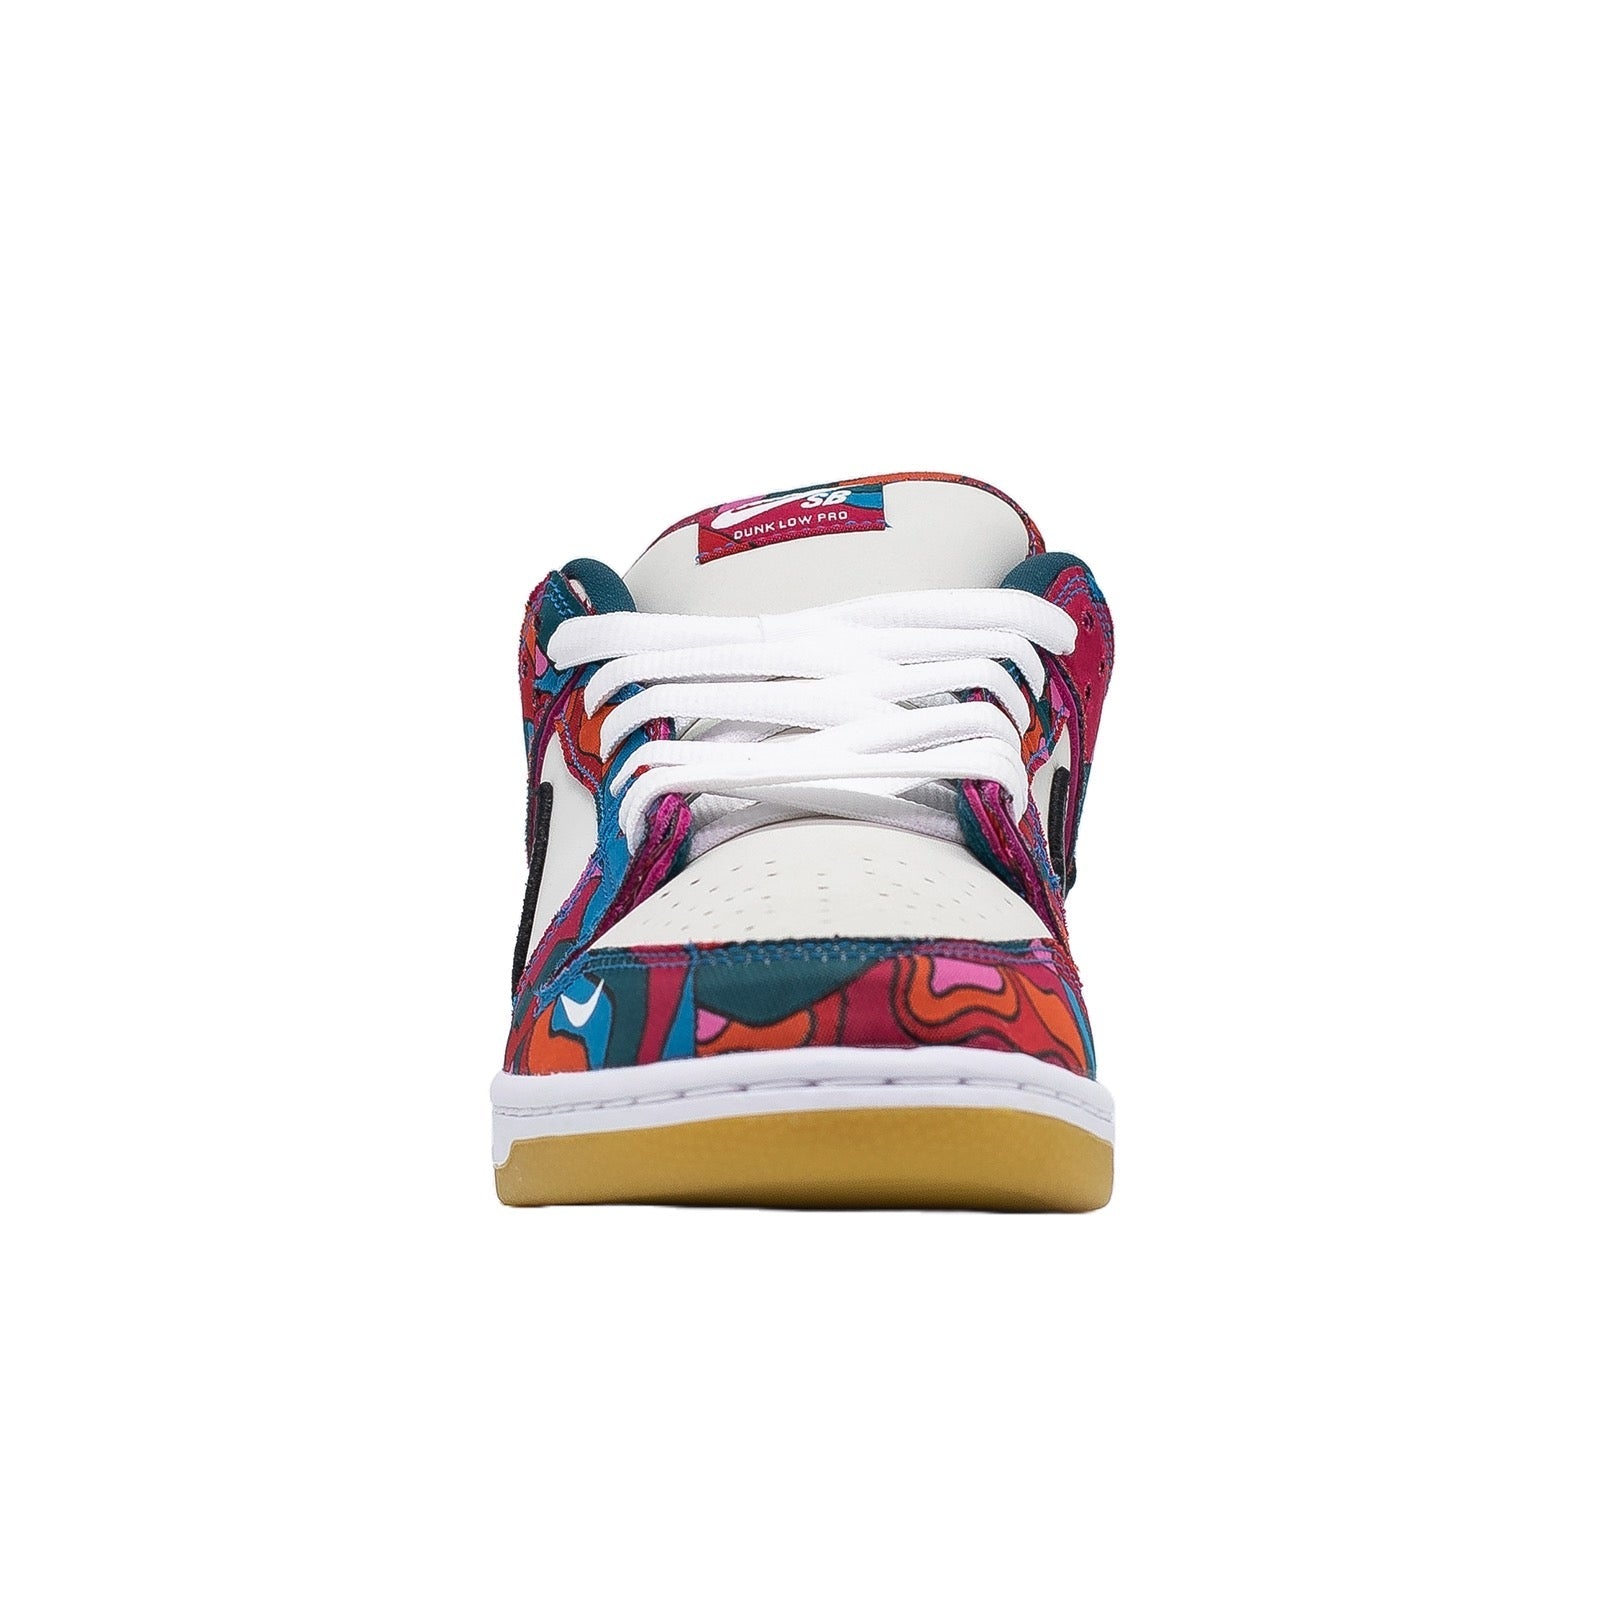 Nike x Parra SB Parra Dunk Low Pro Abstract Art Low Top Sneakers